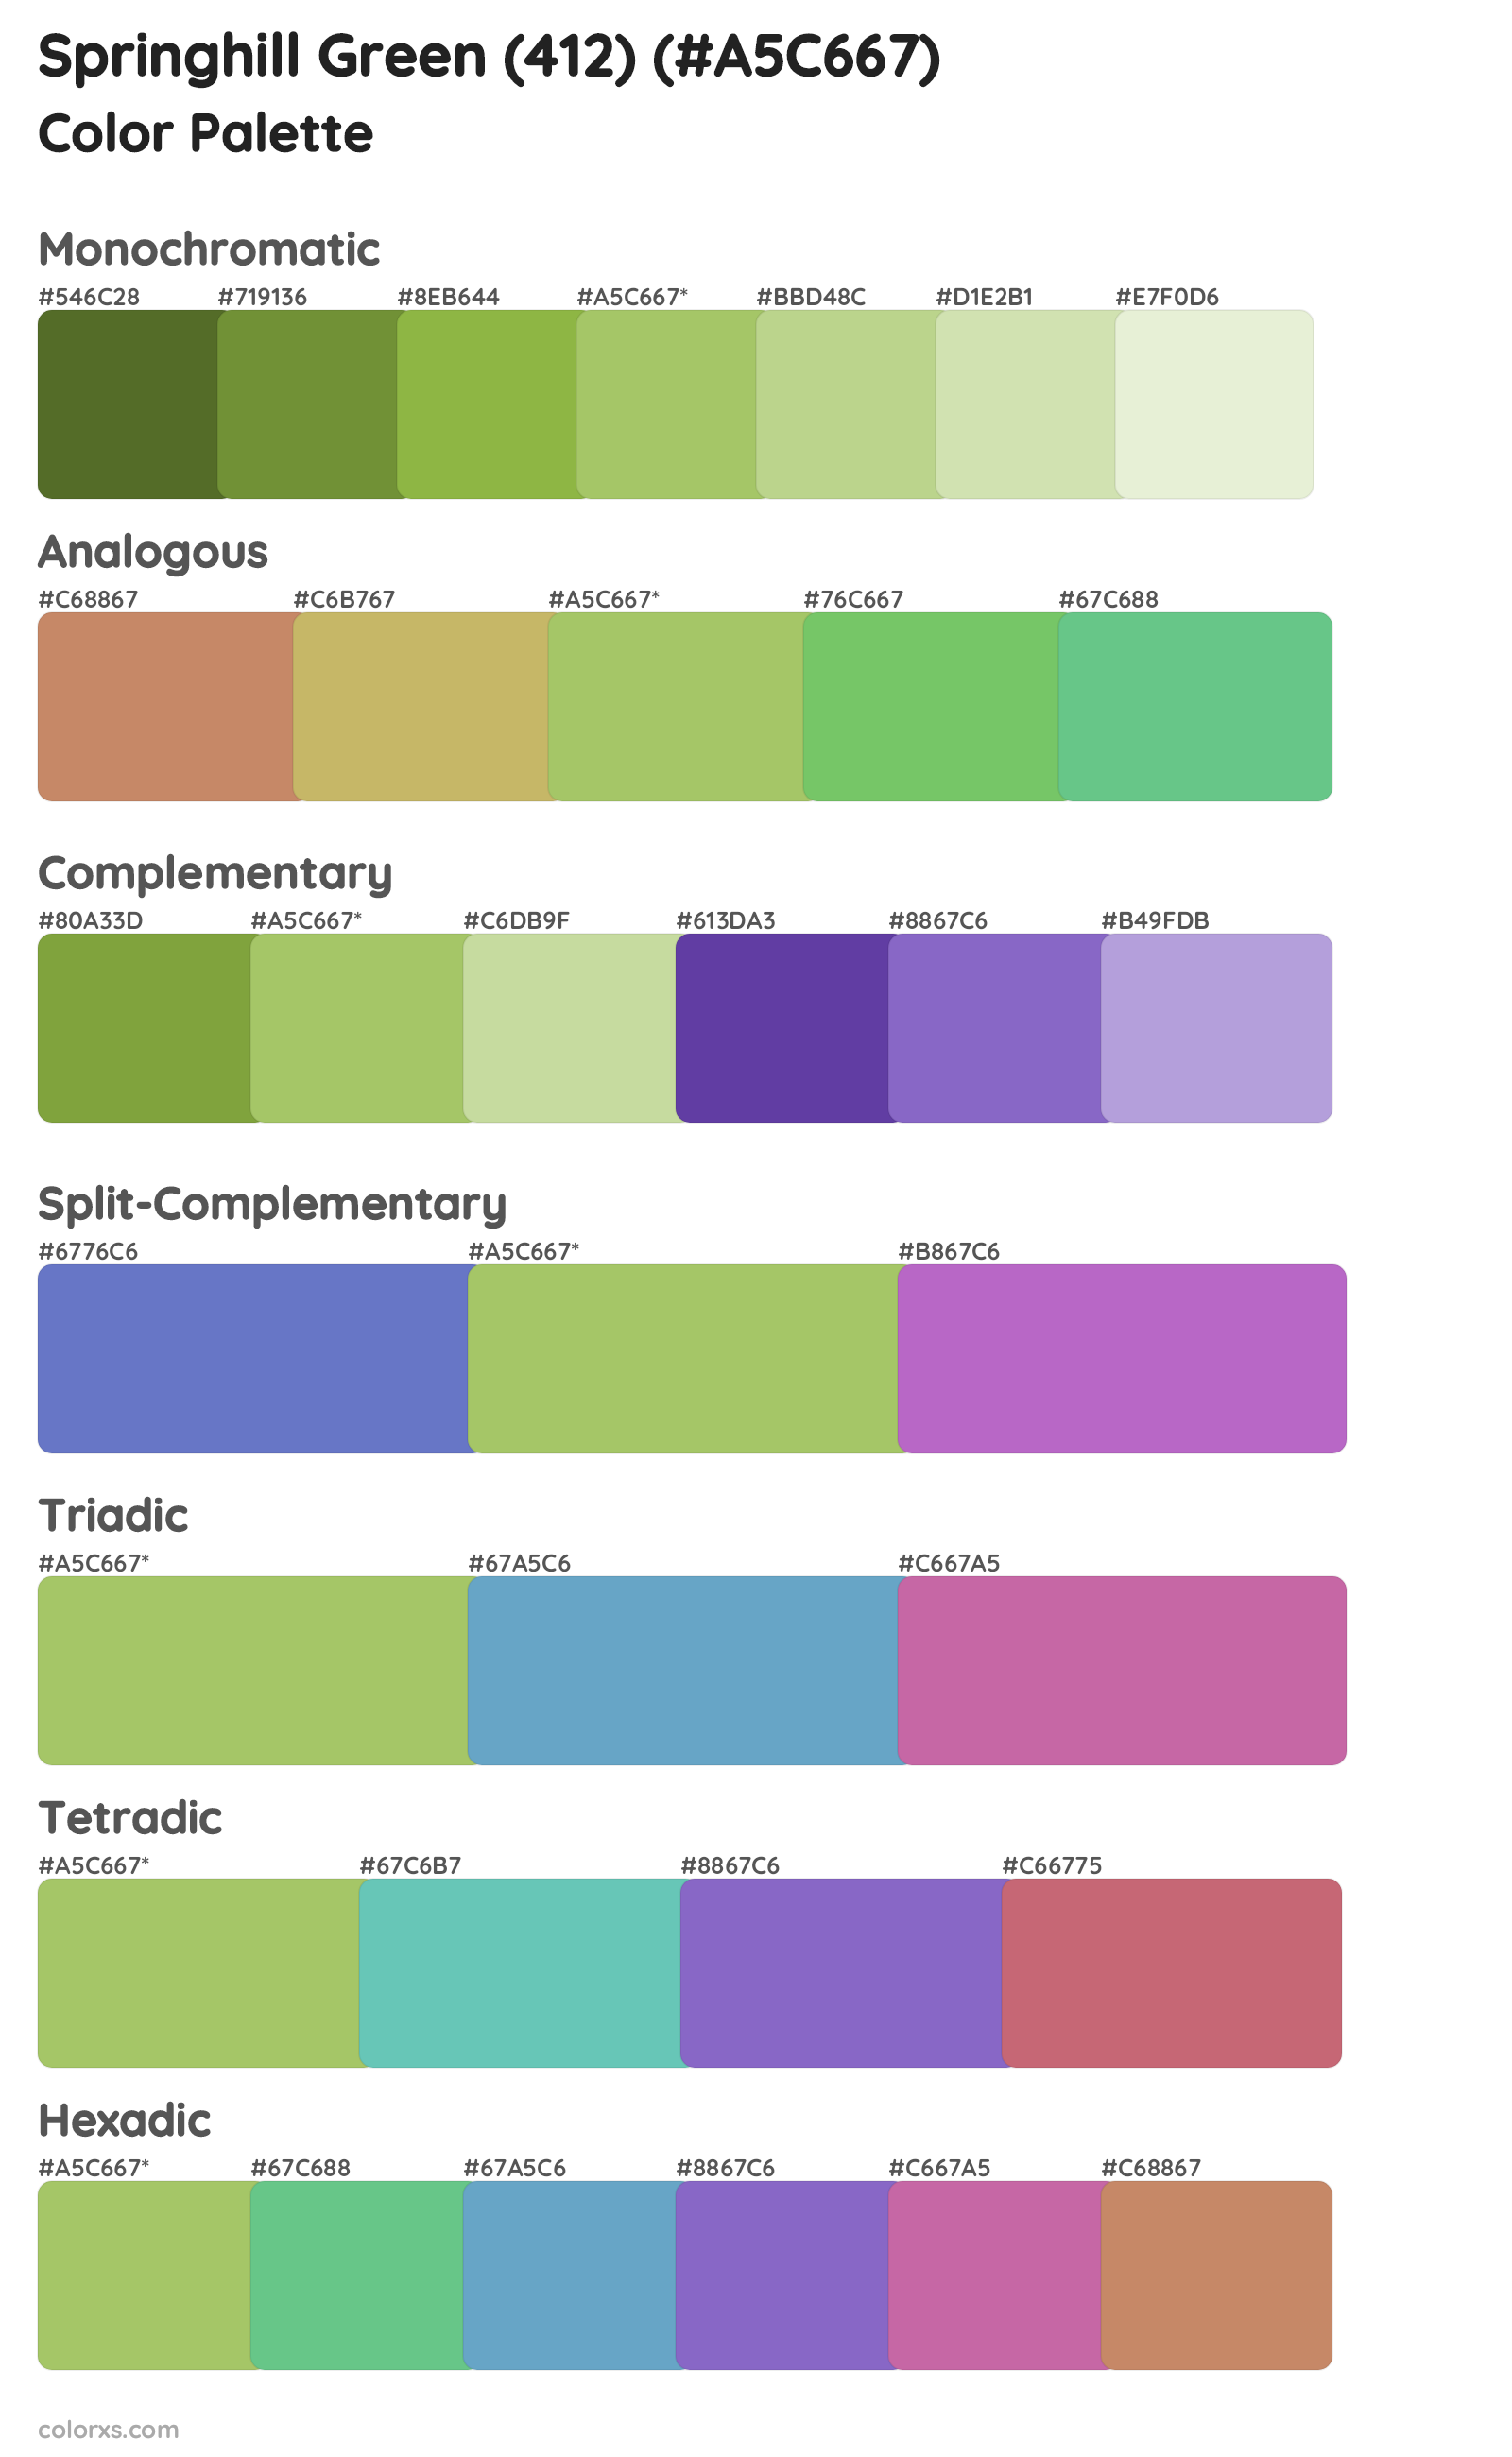 Springhill Green (412) Color Scheme Palettes